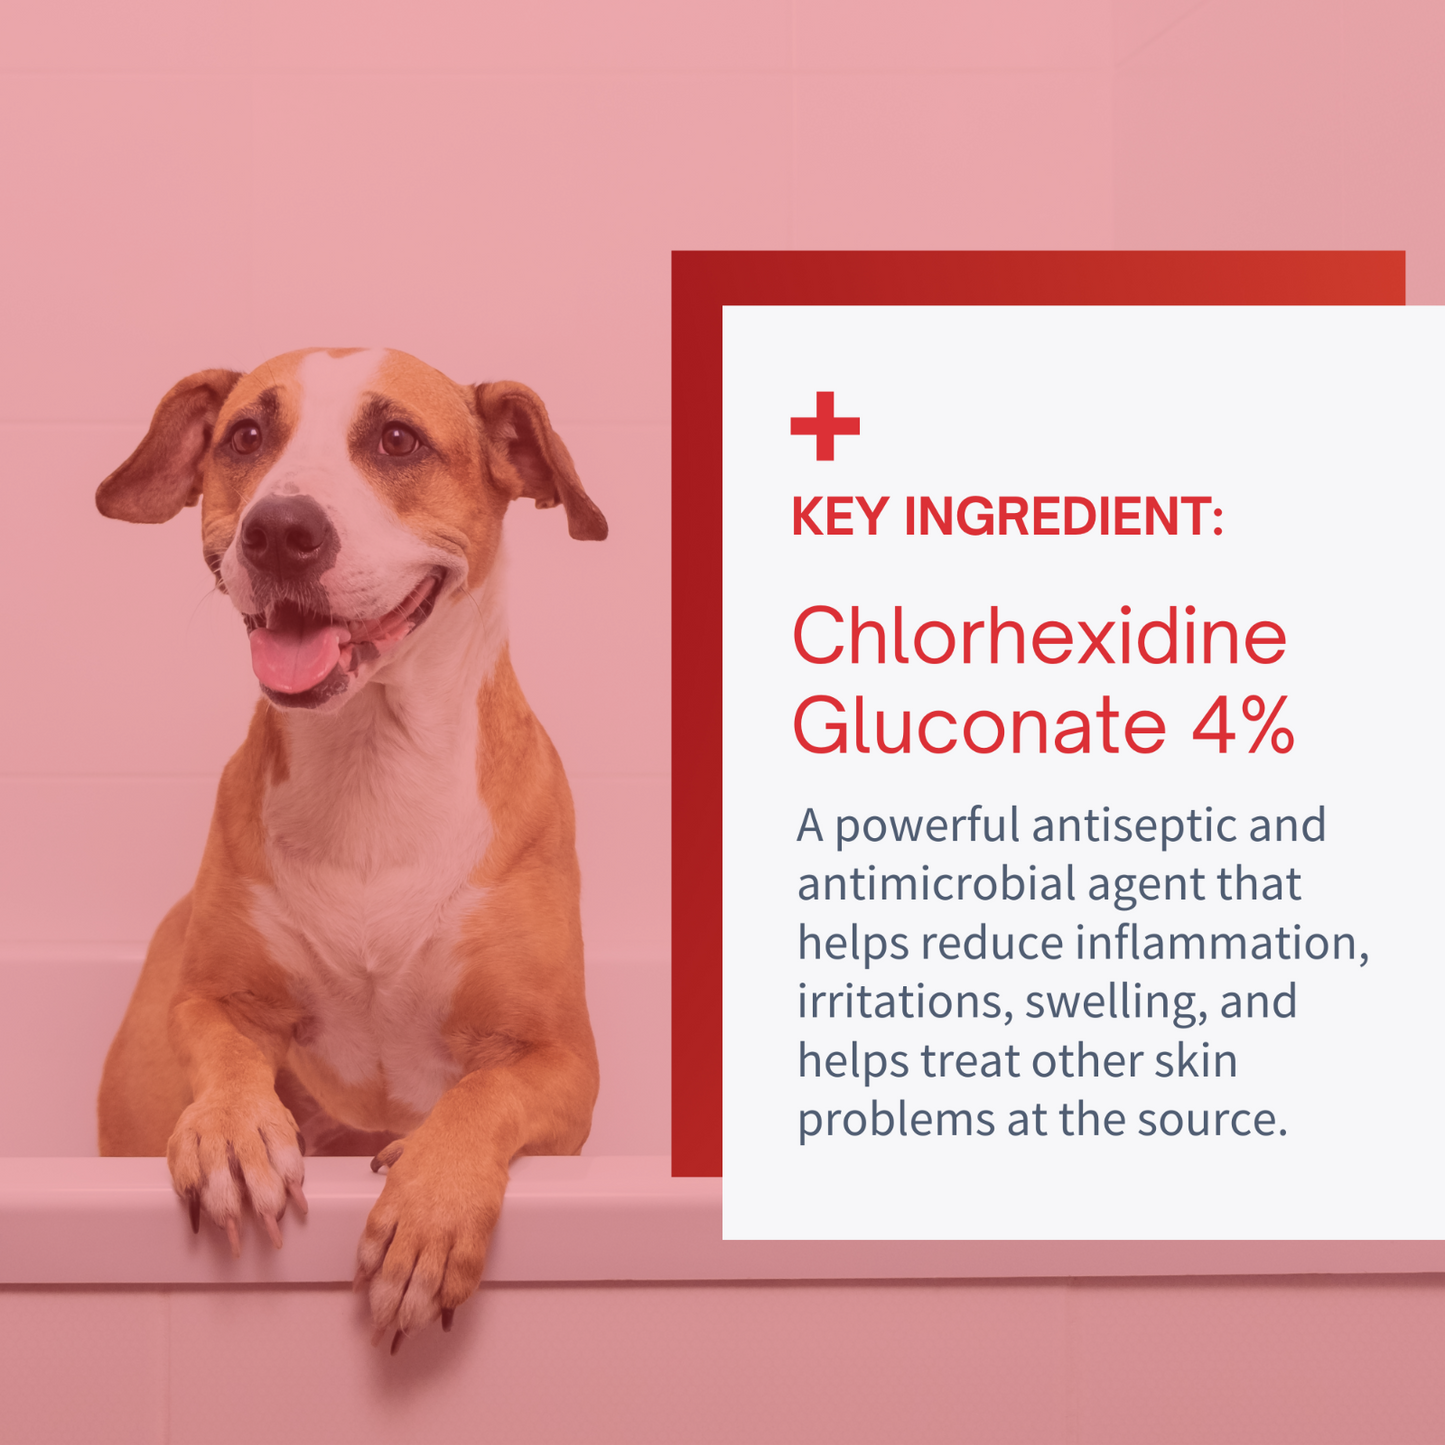 Chlorhexidine 4% Max Strength Shampoo Medicated Shampoo for Dogs & Cats